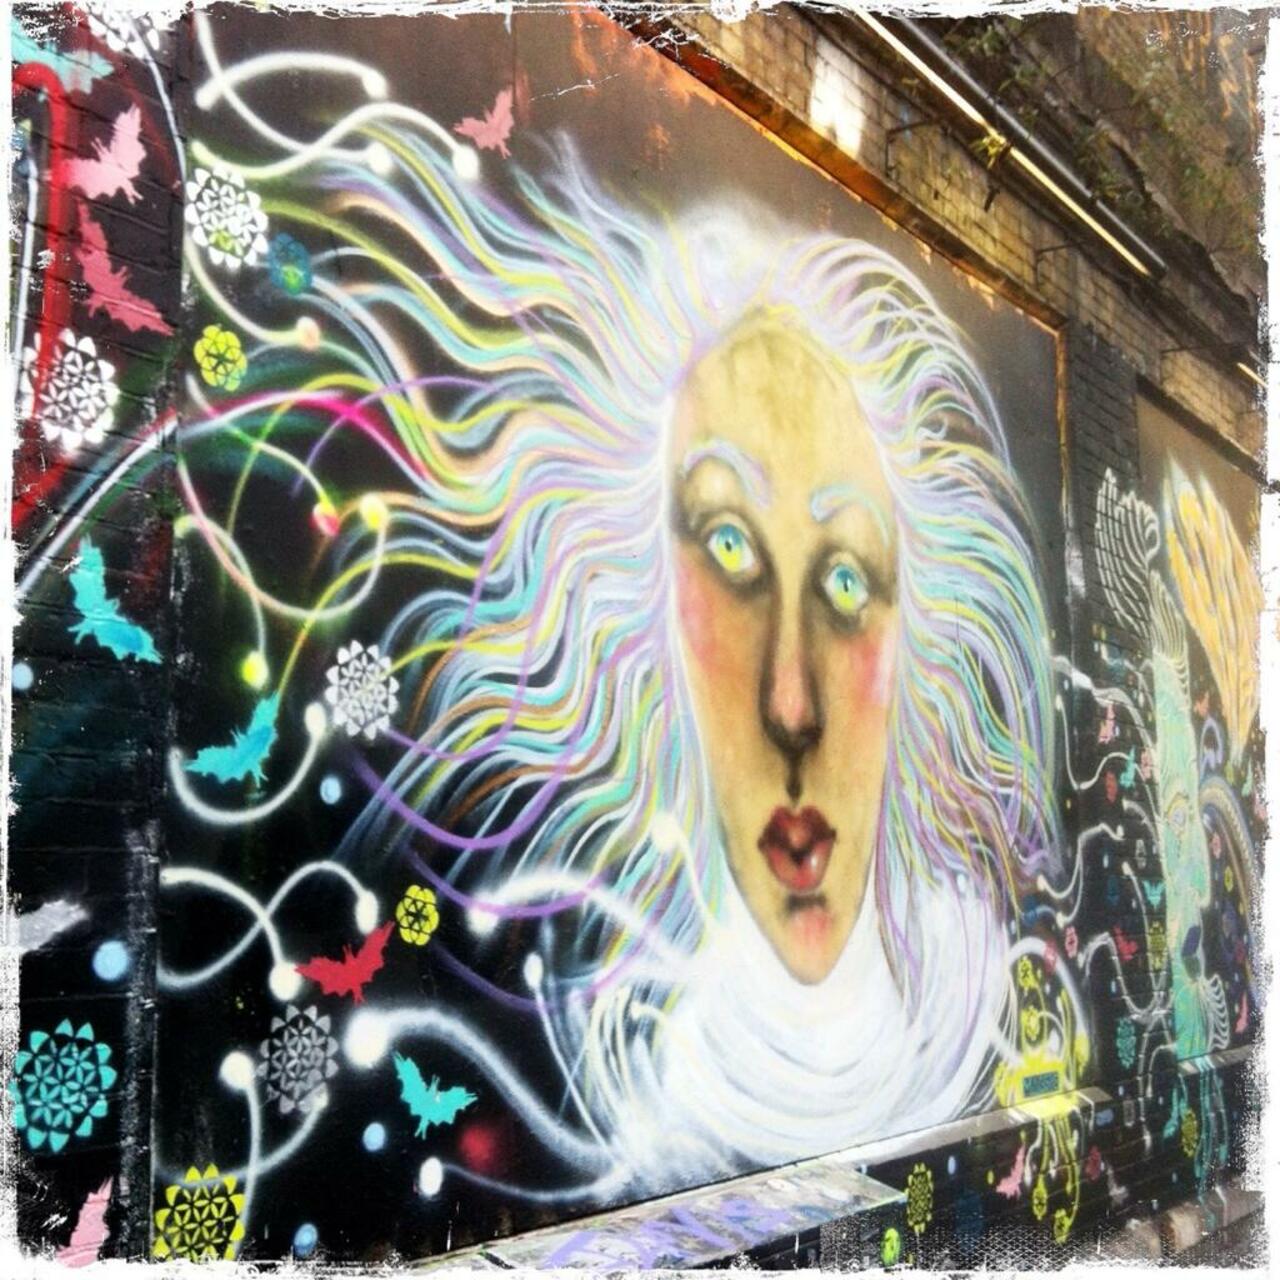 Maggio & Jarvis #art #streetart in #shoreditch #graffiti @UKGraff @globalgraff http://t.co/jnoVwN3M4c